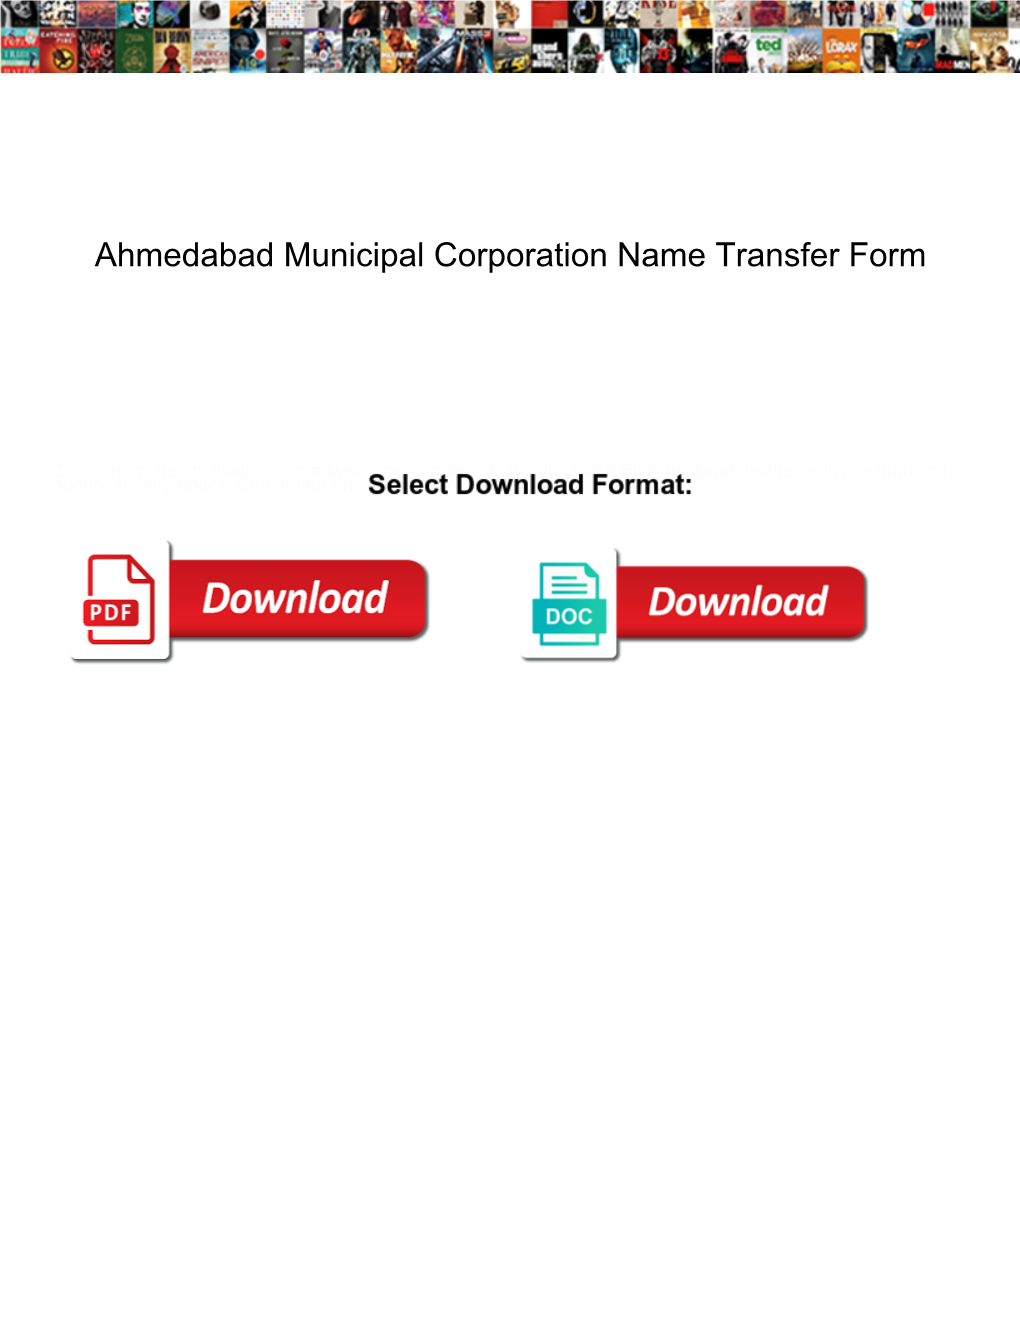 Ahmedabad Municipal Corporation Name Transfer Form